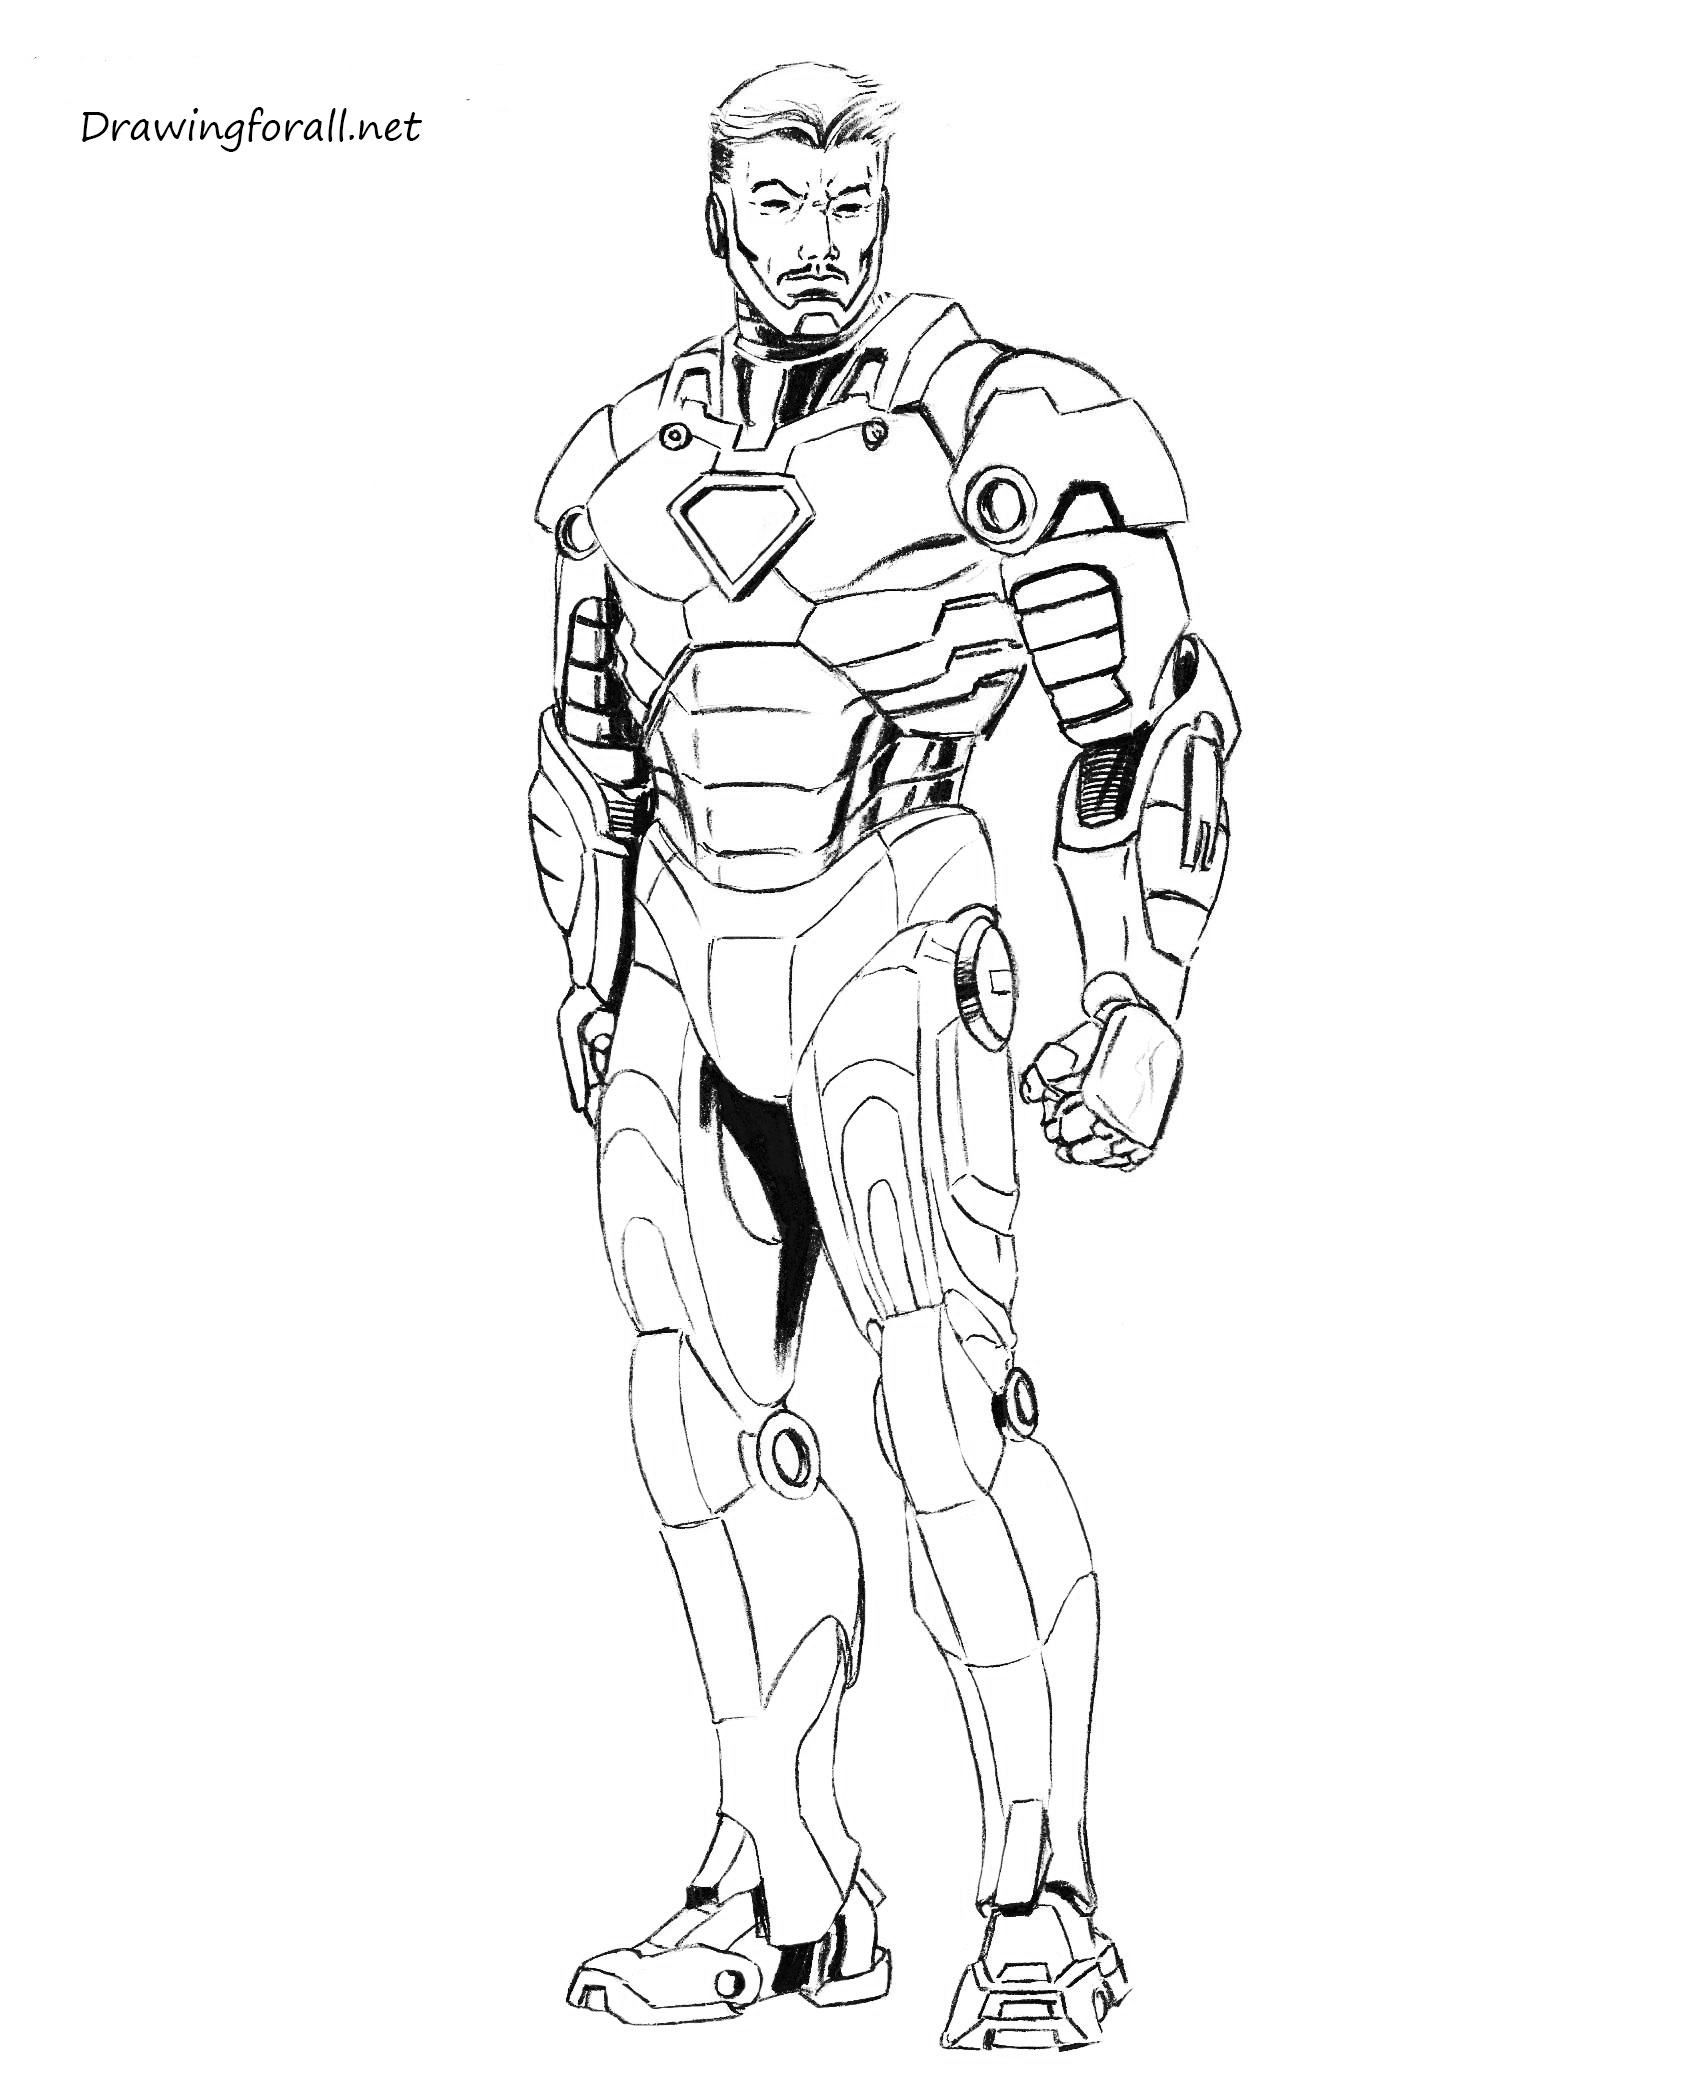 iron man full body drawing